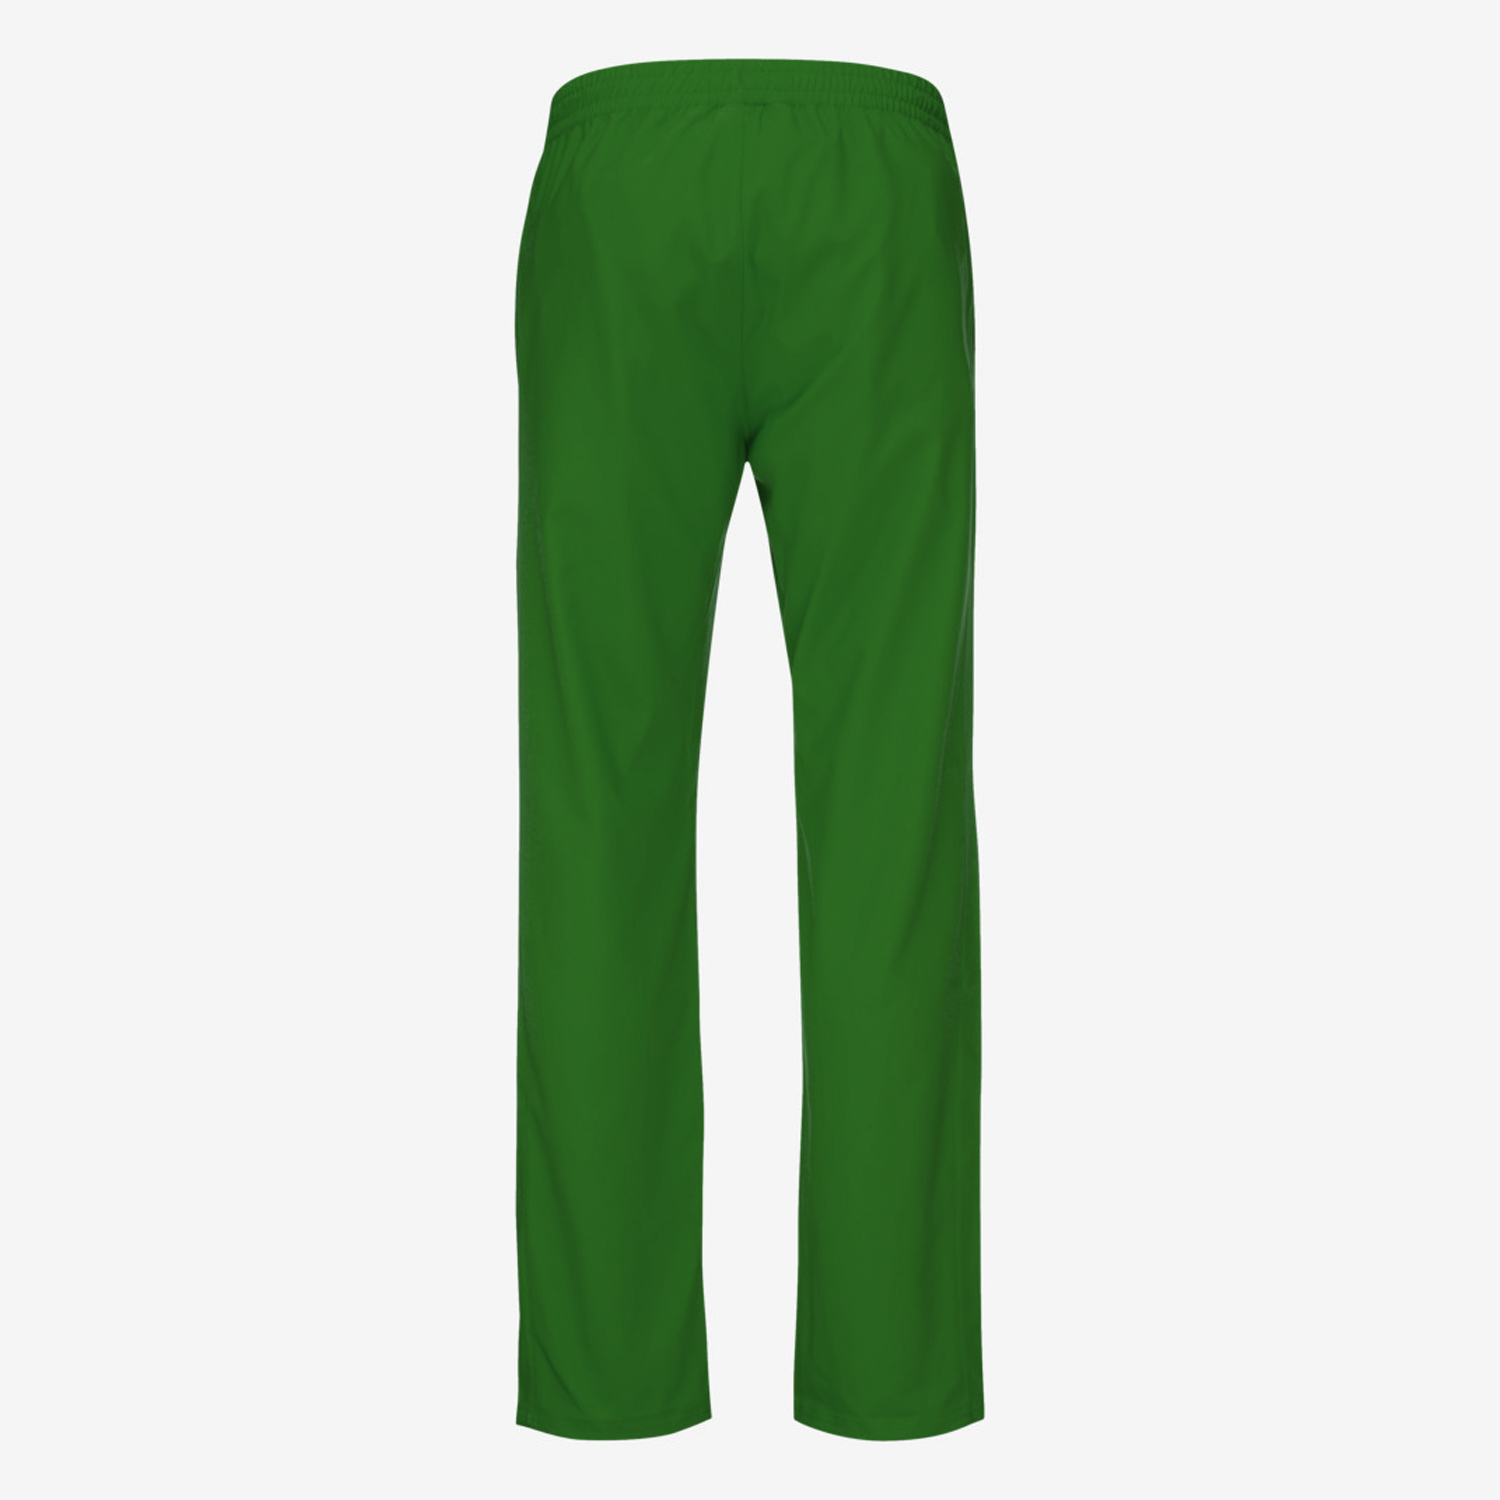 Head Club Pantalones Niños - Green